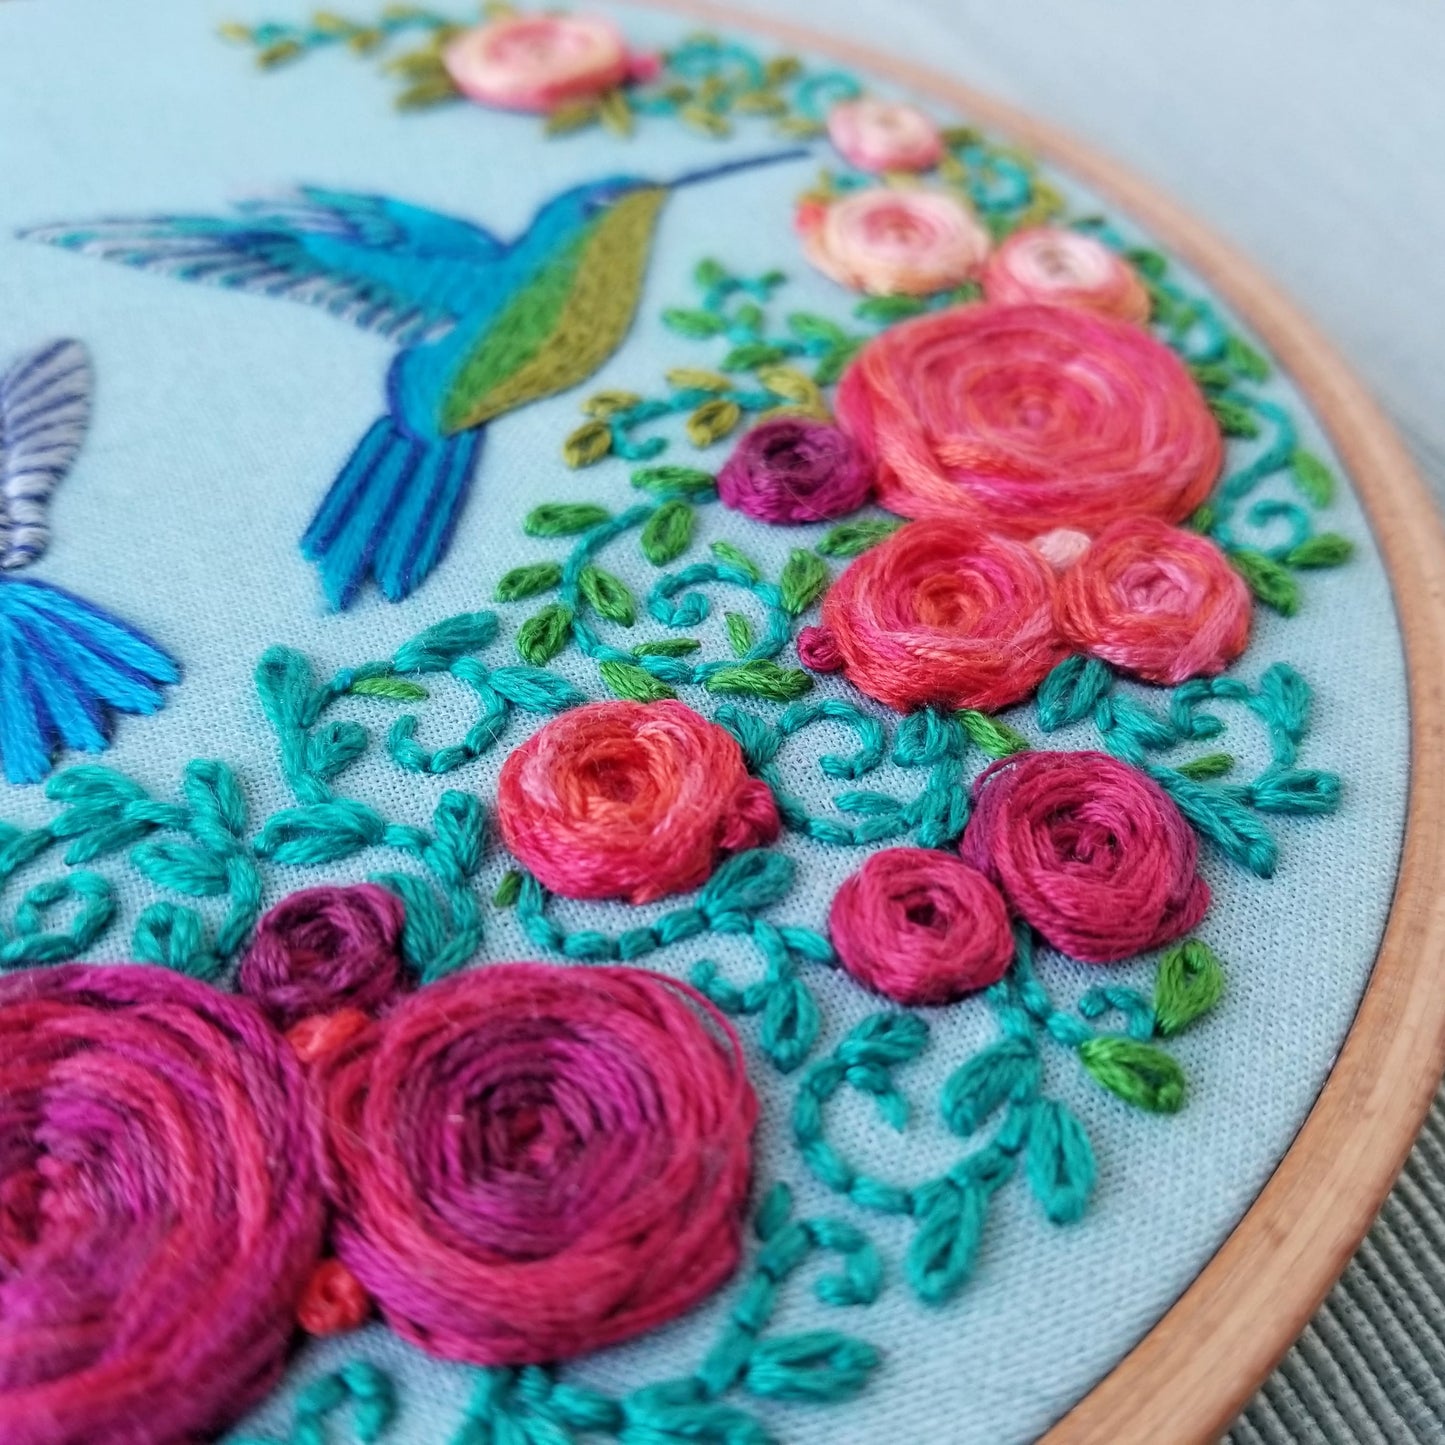 Autumn Birds Embroidery Kit – Colour and Cotton